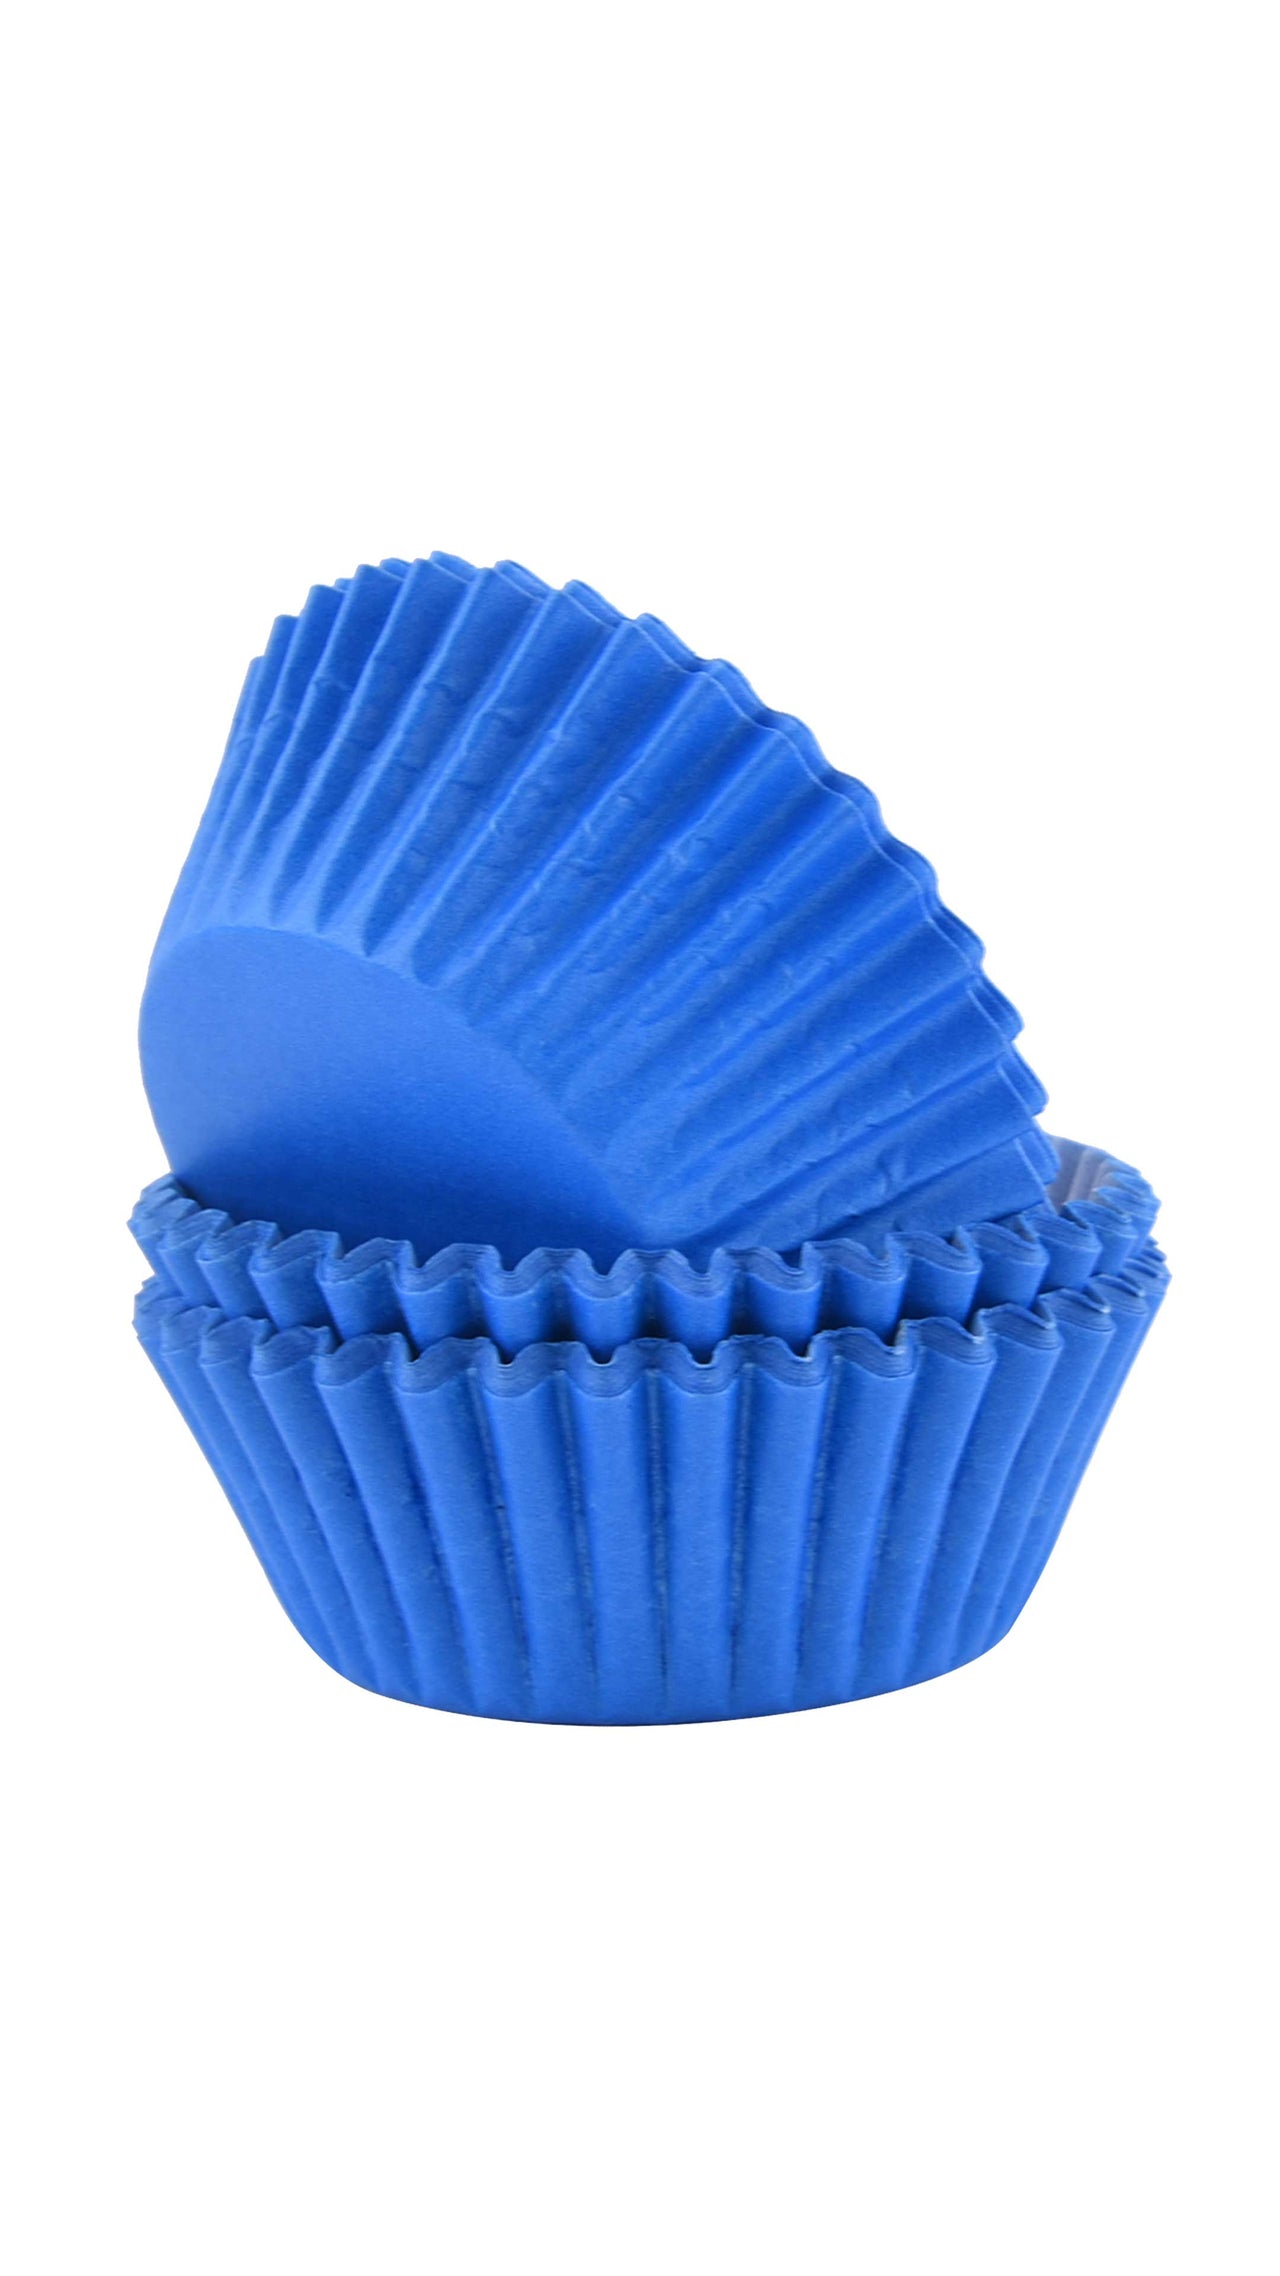 PME - Cupcake Cases - Blue - 60 Pack Cupcake Cases PME